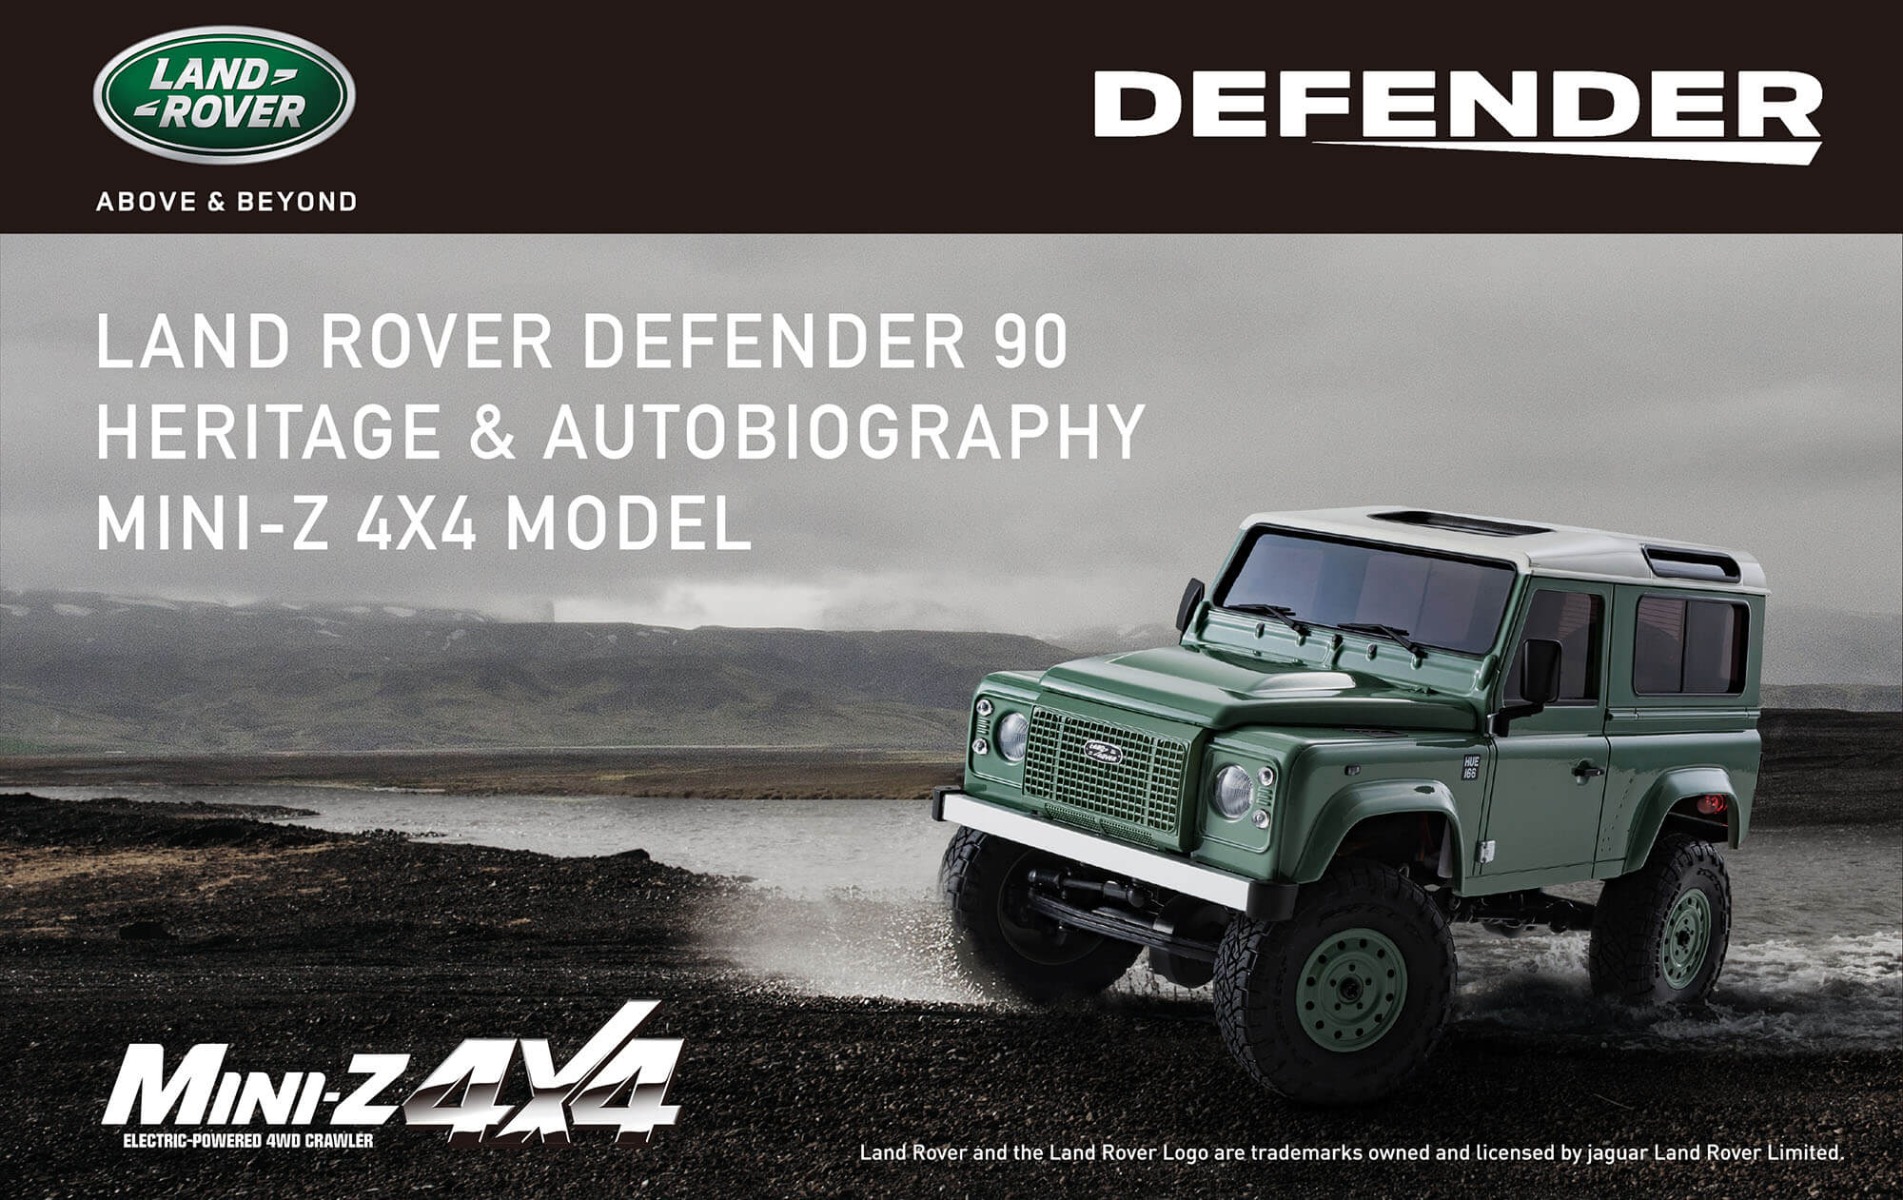 LAND ROVER DEFENDER 90 HERITAGE & AUTOBIOGRAPHY MINI-Z 4X4 MODEL